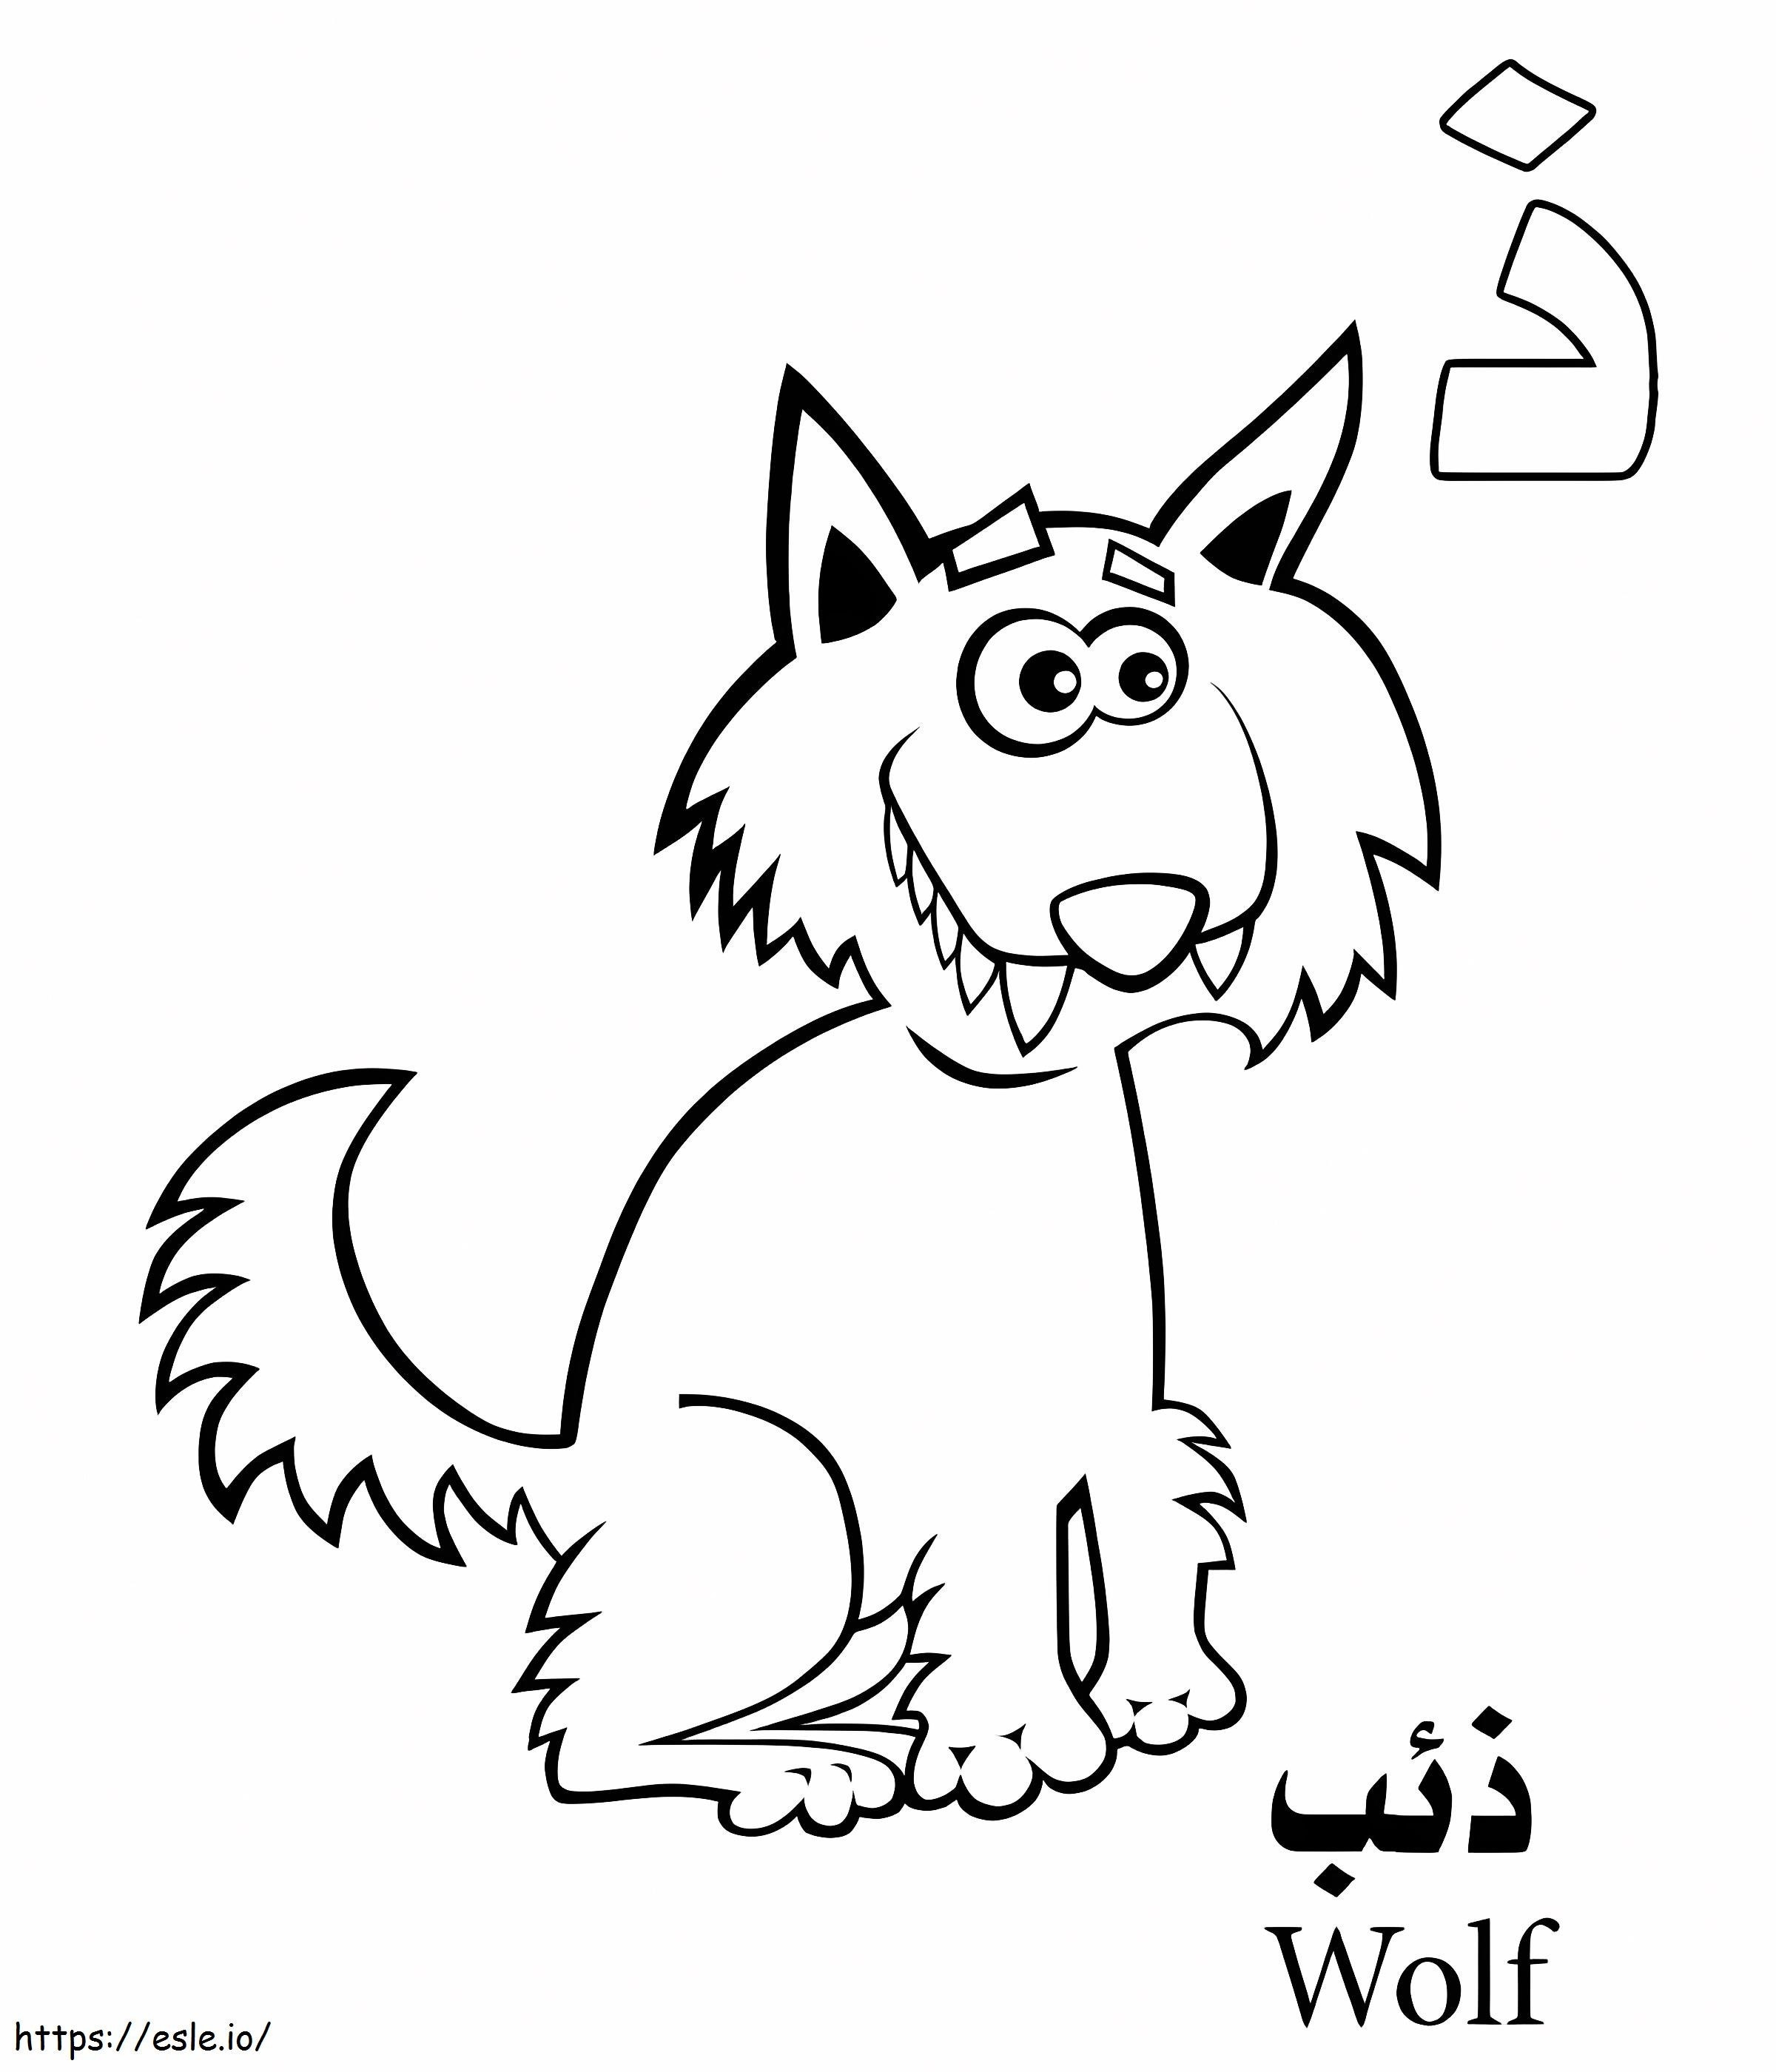 Alfabeto árabe do lobo para colorir